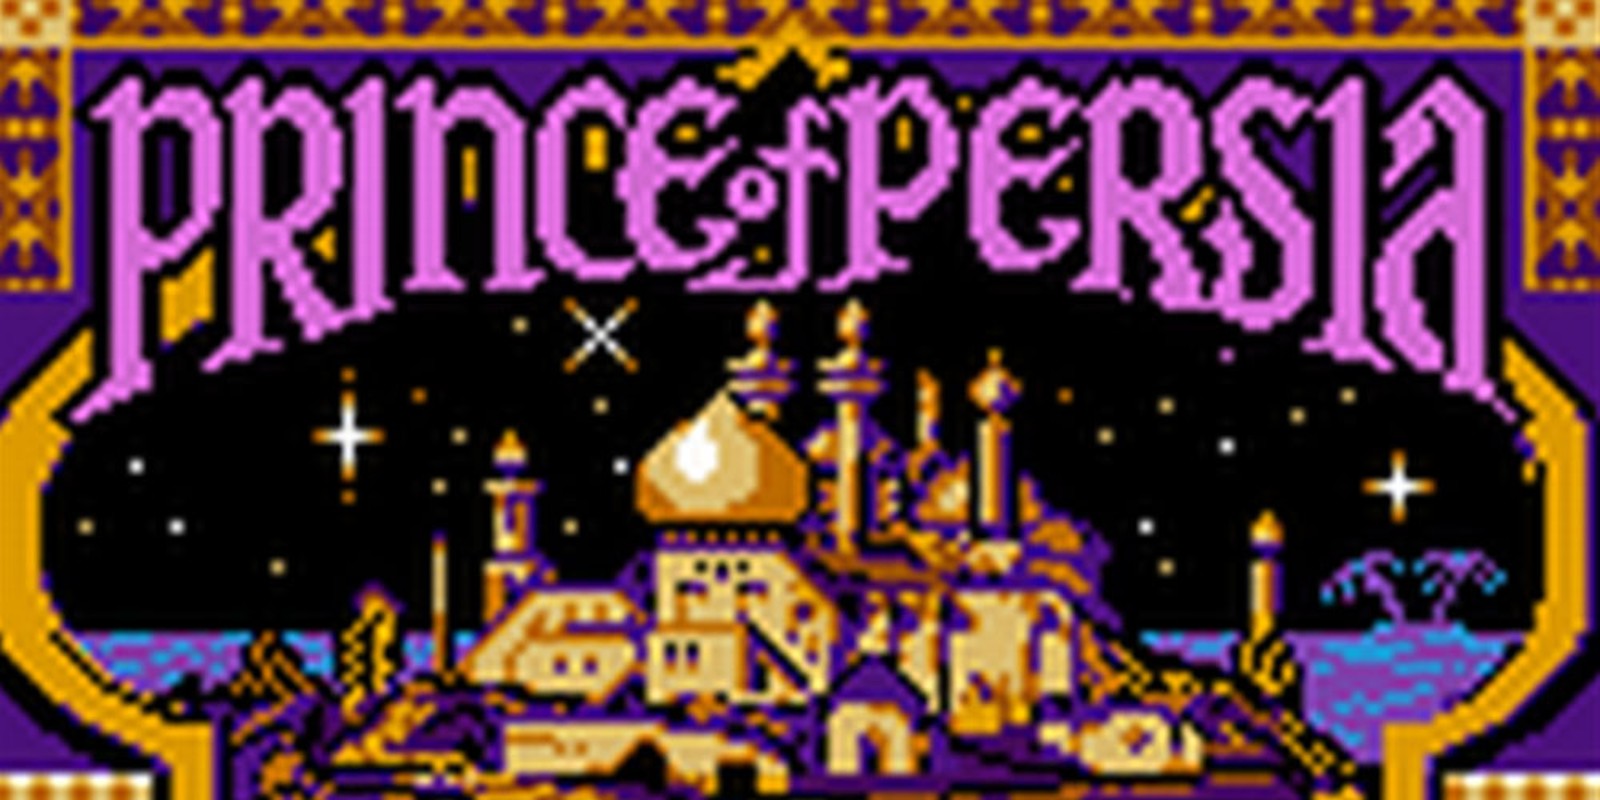 Ubisoft Prince of Persia - Juego (Wii) : : Videojuegos